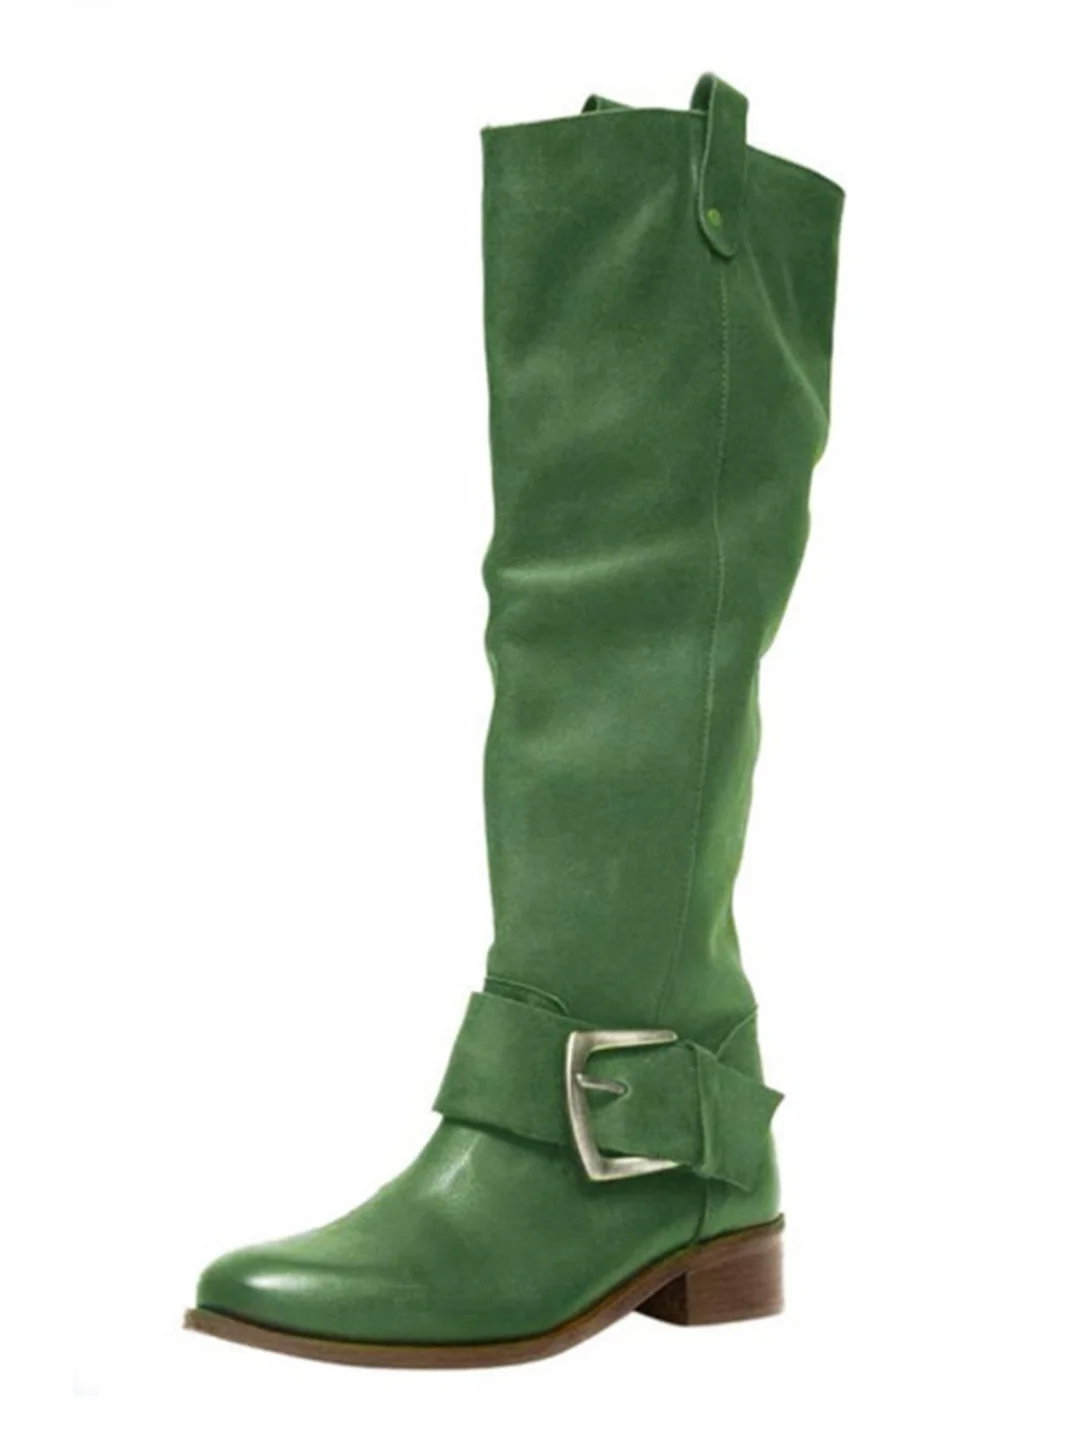 Flat Heel Leather Boots | EGEMISS